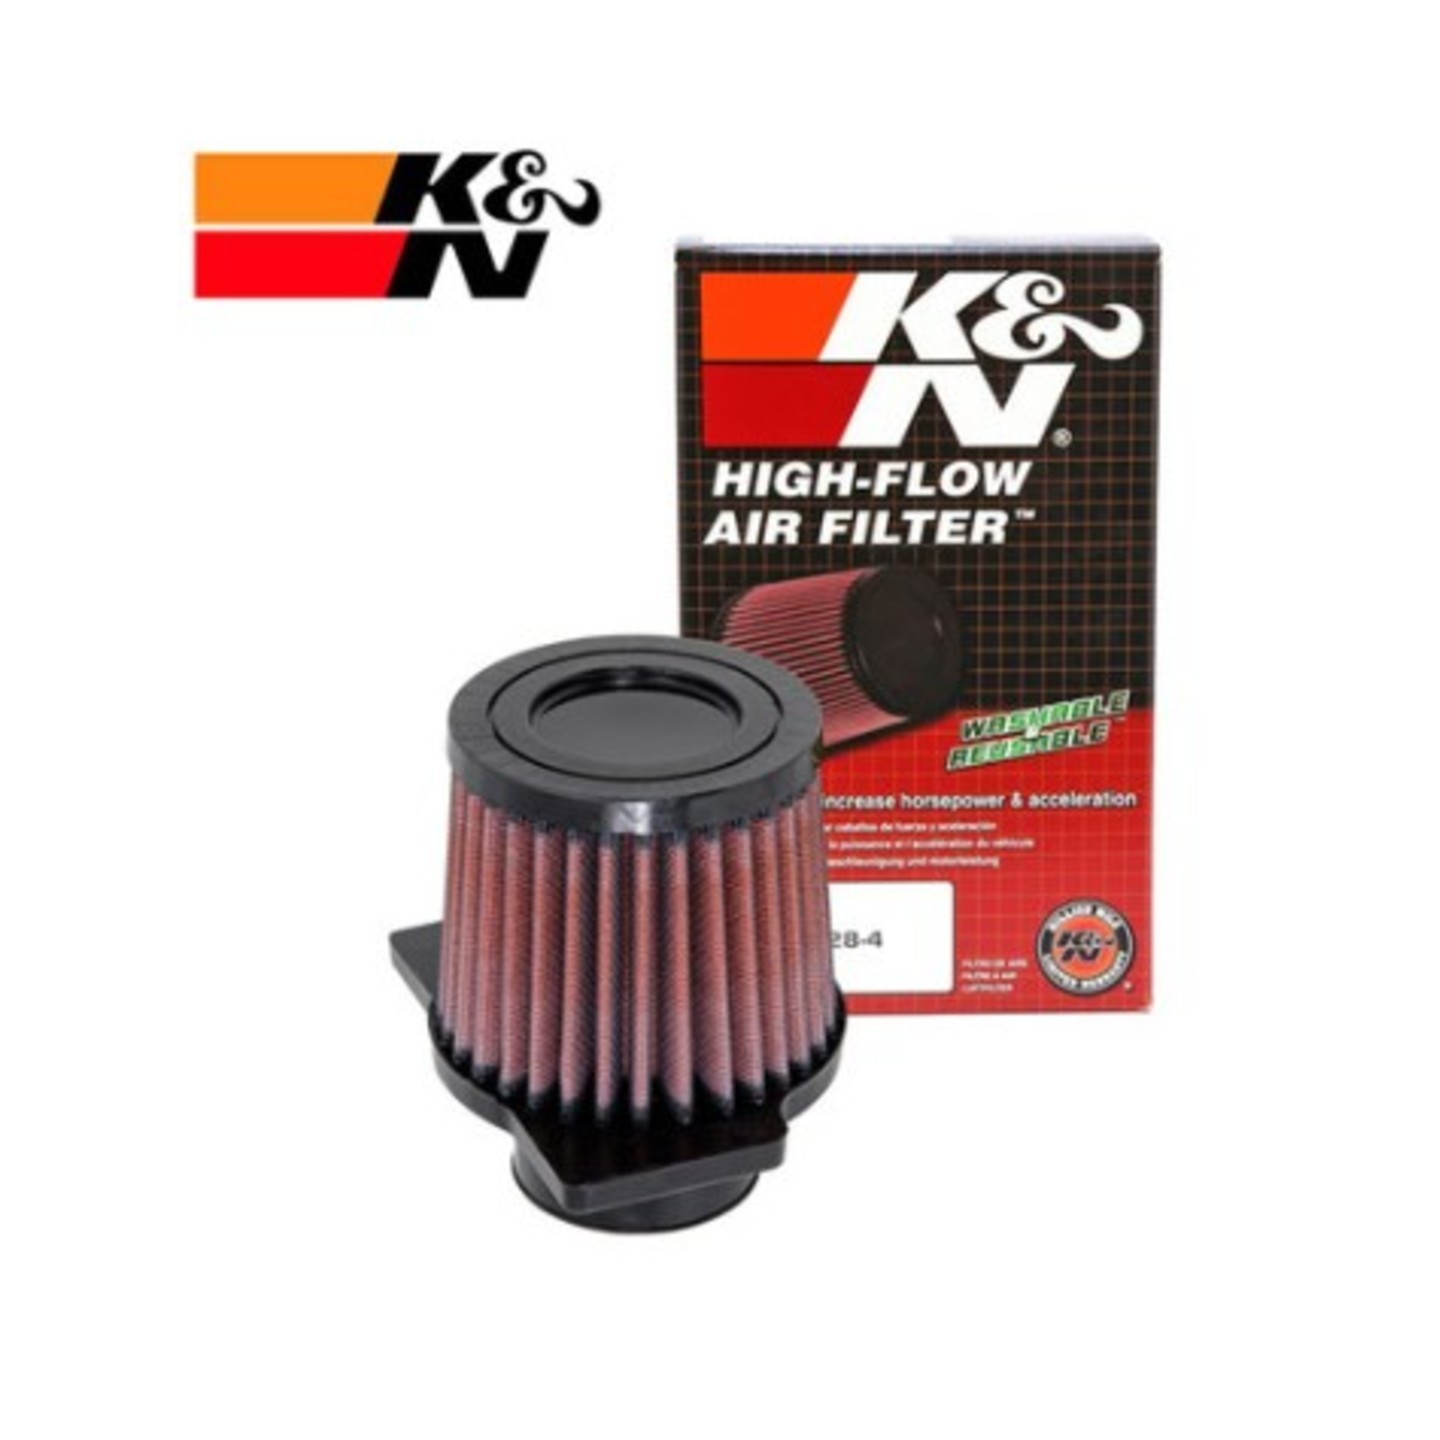 Honda K&N high flow air filter washable reusable HA-5013